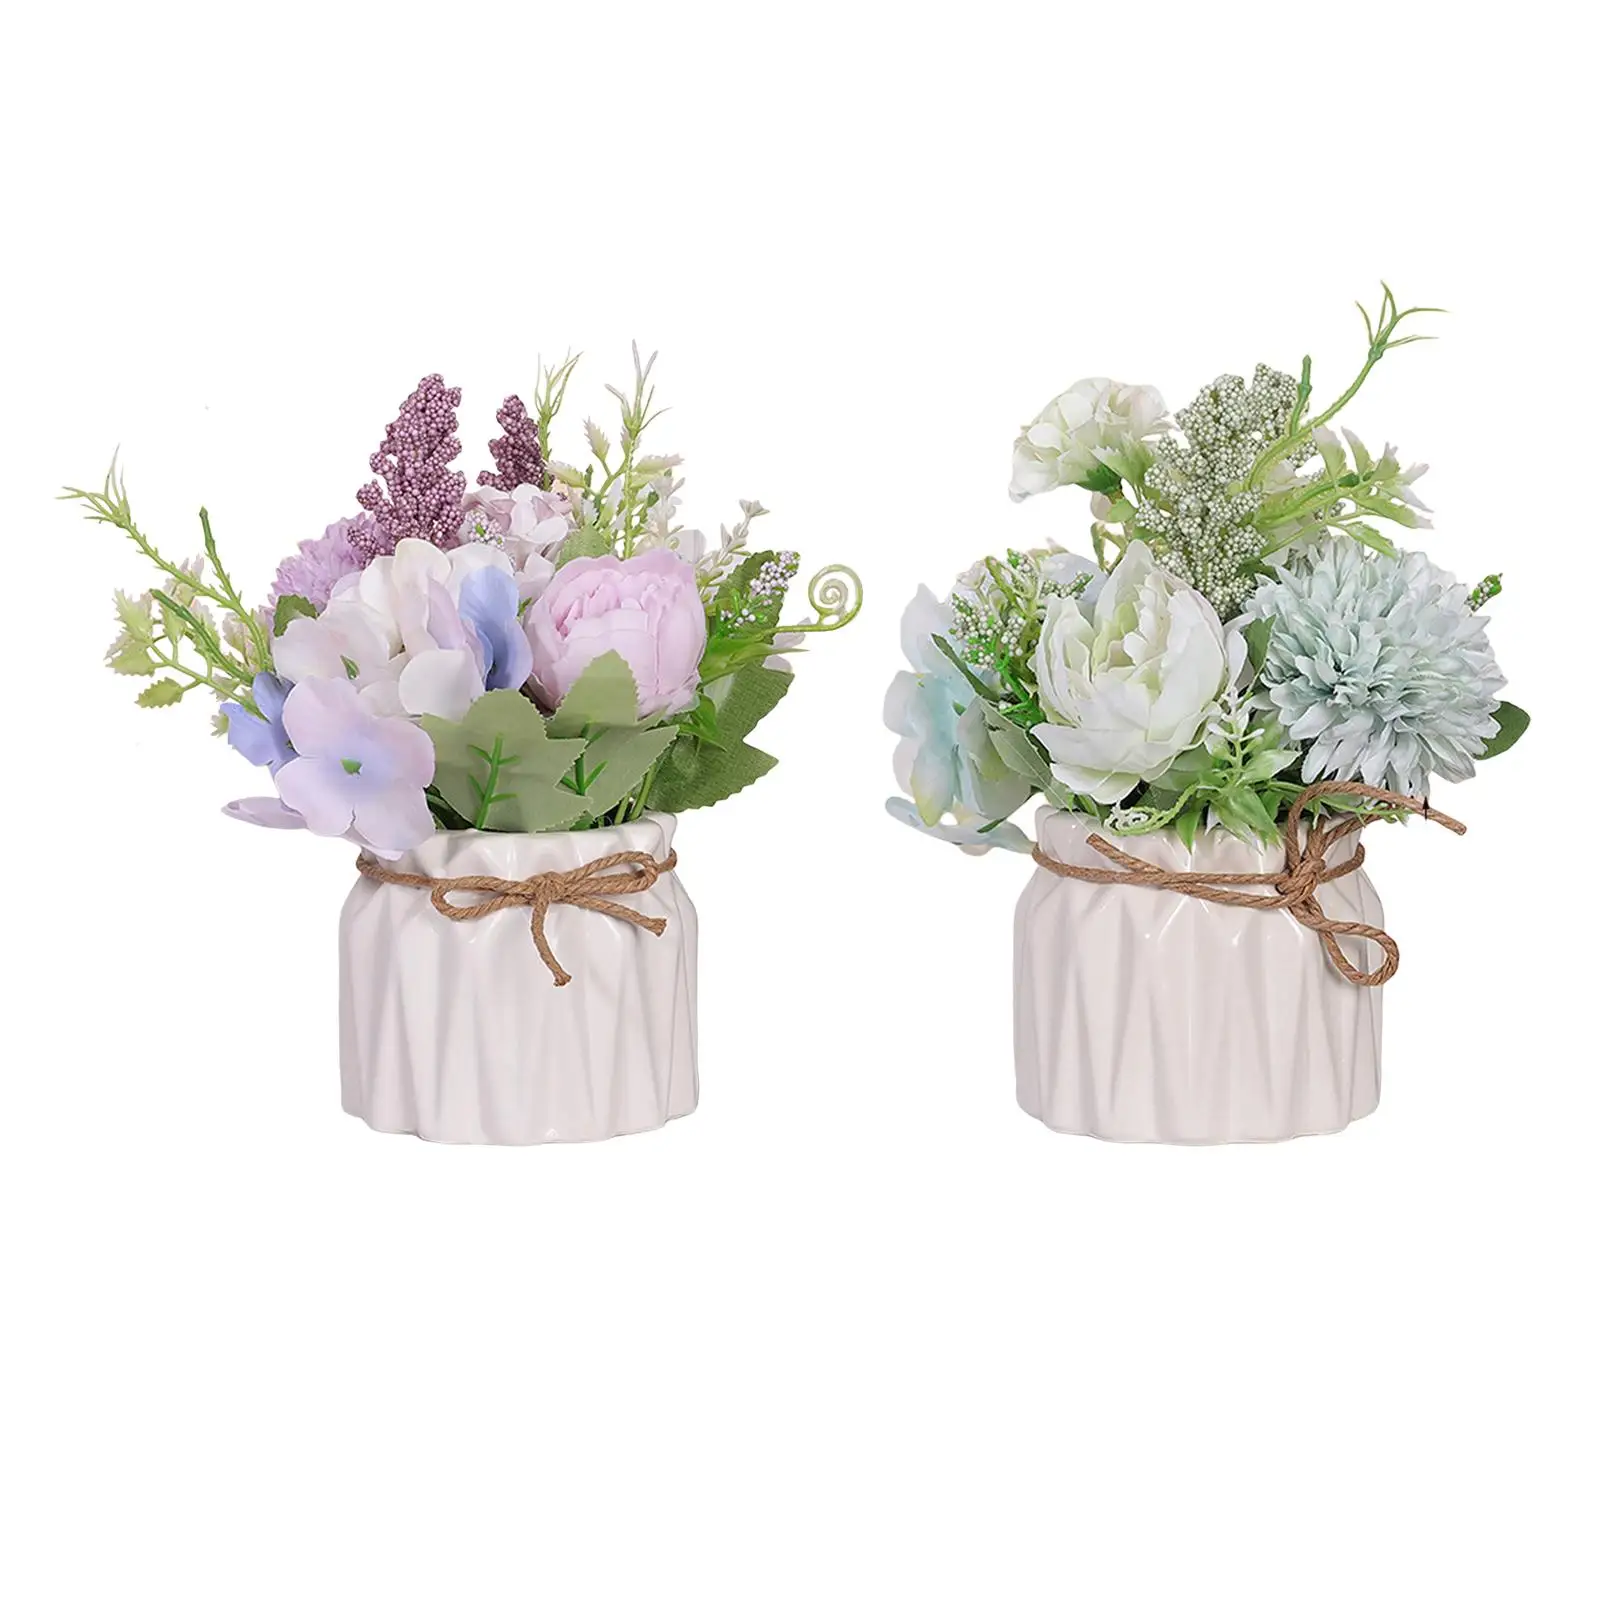 Artificial Flowers Hydrangea Bonsai with Ceramic Vase Plant Potted Floral Arrangement for Home Desktop Decoration Ornament Gift